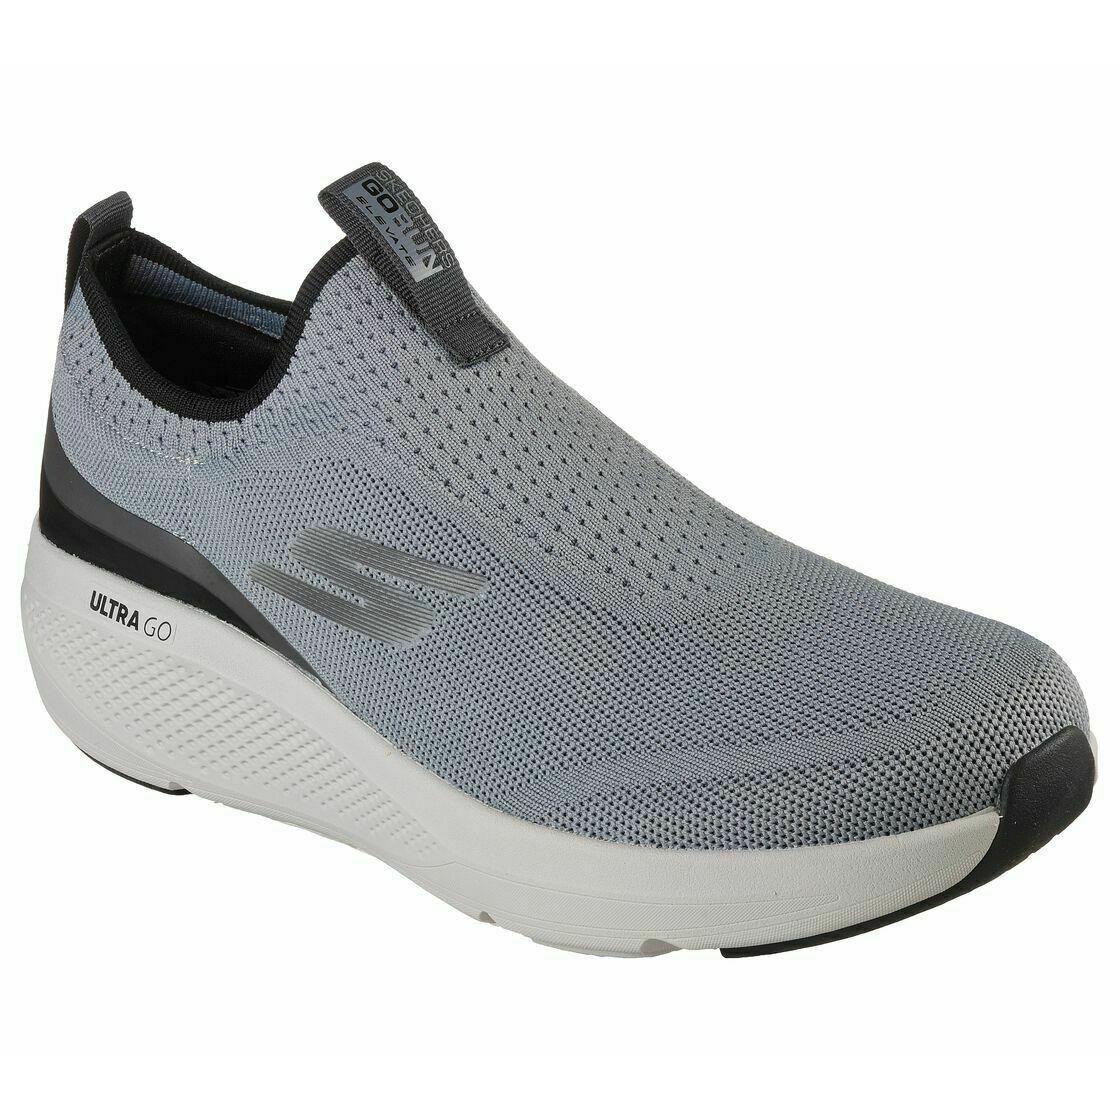 Go Run Skechers Men Shoe Slip On Gray Train Elevate Cushion Sport Comfort 220185 - Gray / White